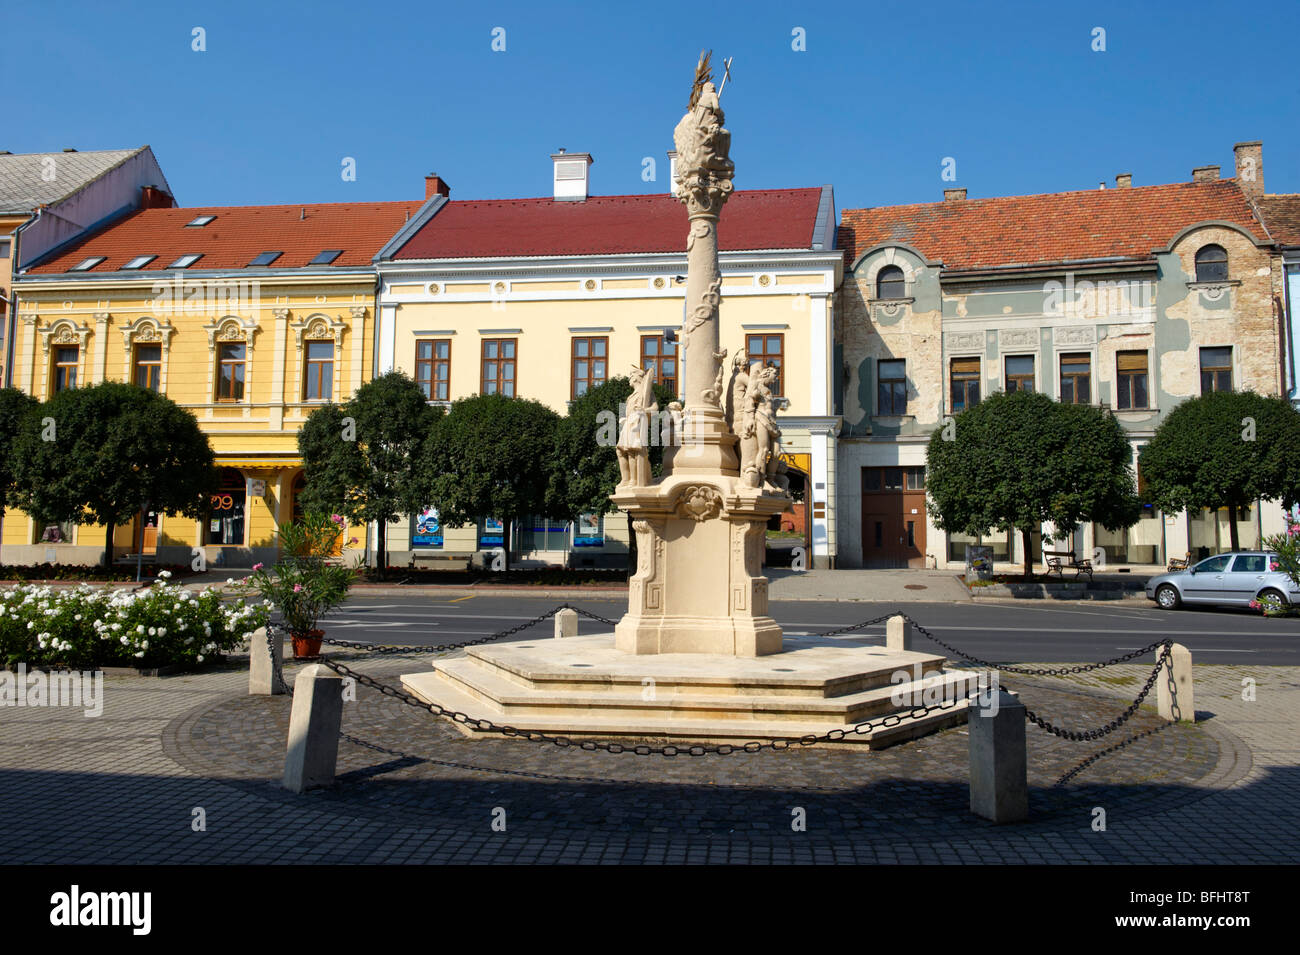 Cross on the main street of the old town - Tapolca, Balaton, Hungary Stock Photo